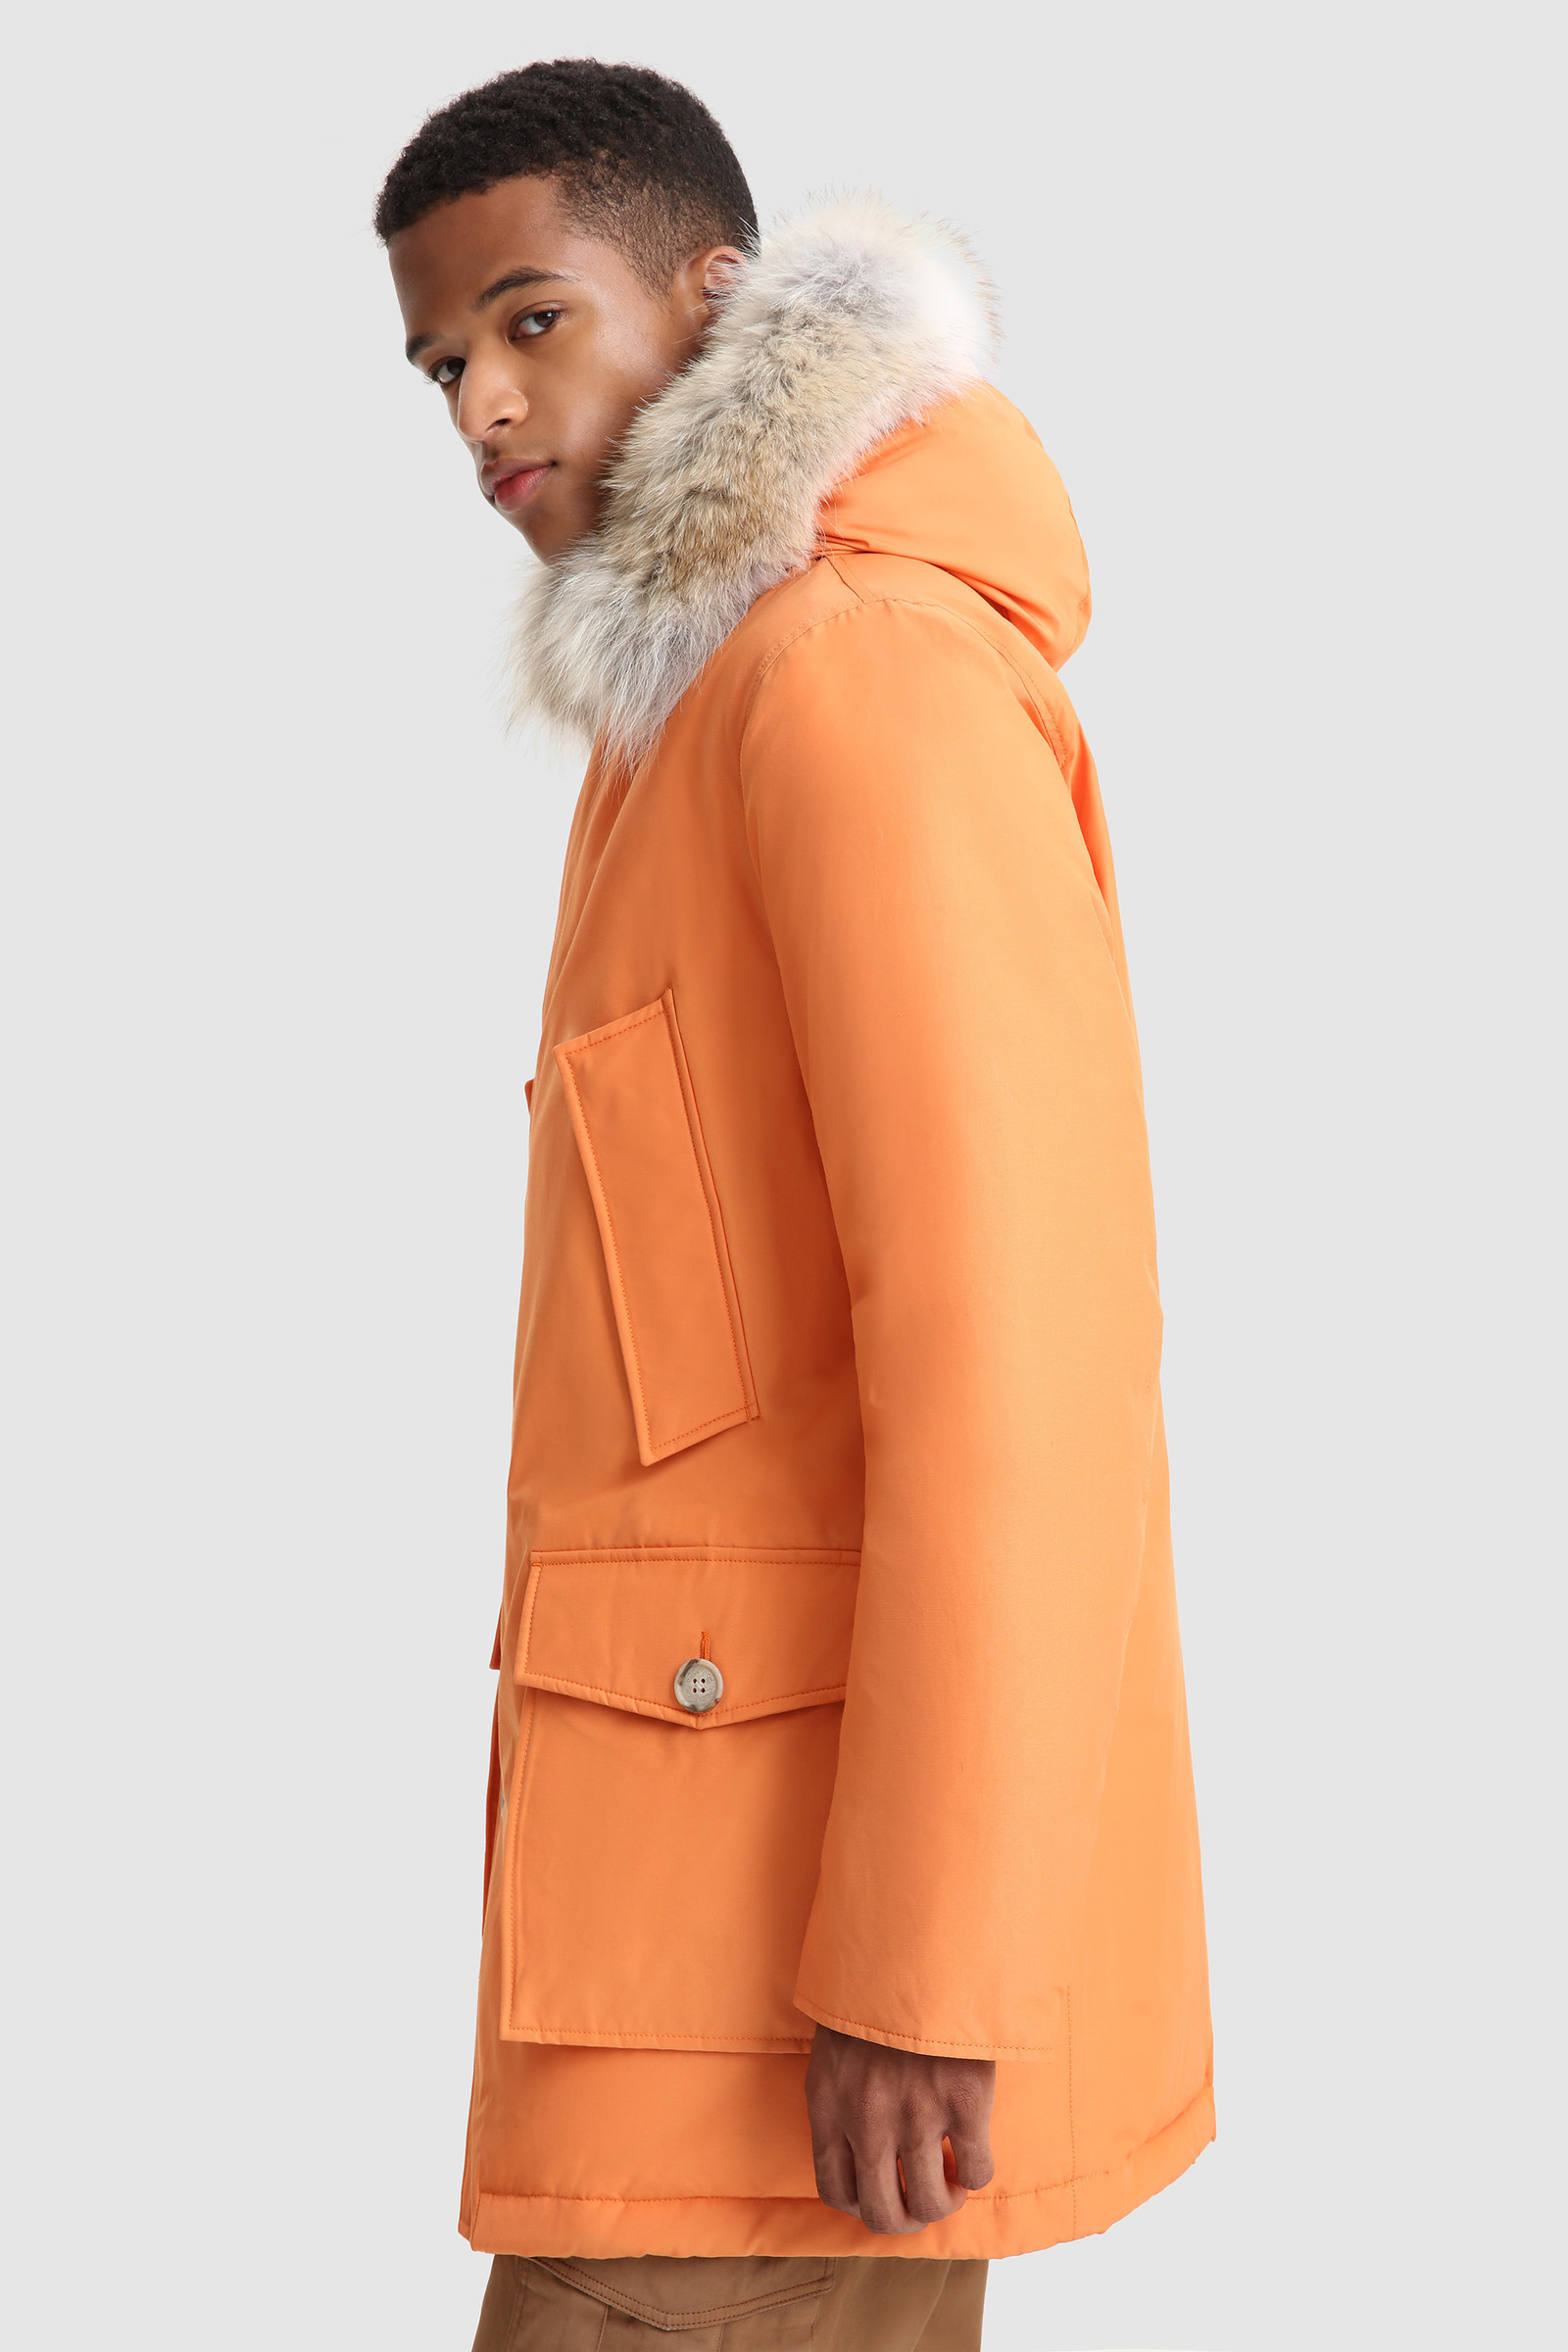 Arctic Parka in Ramar Cloth with Detachable Fur Trim - Men - Orange